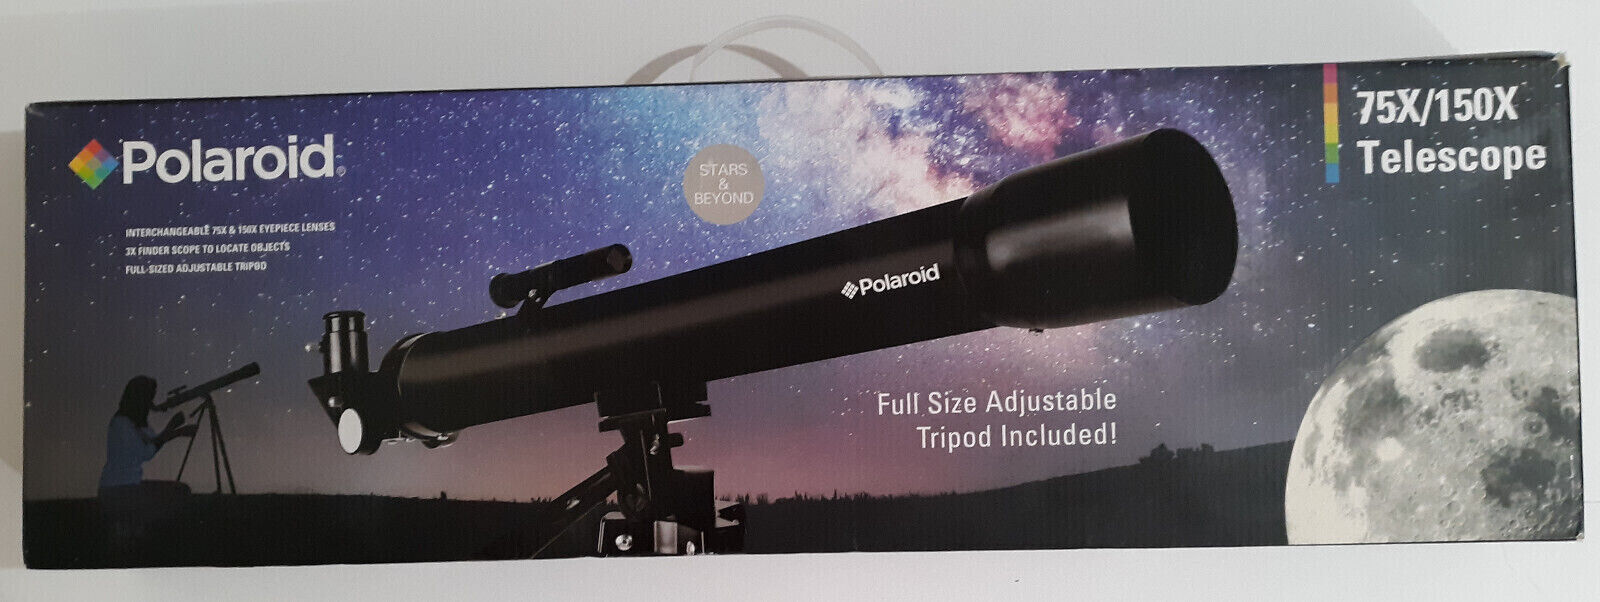 Polaroid IT-160X 75x/150x Refractor Telescope with Tripod Open Box Never Used